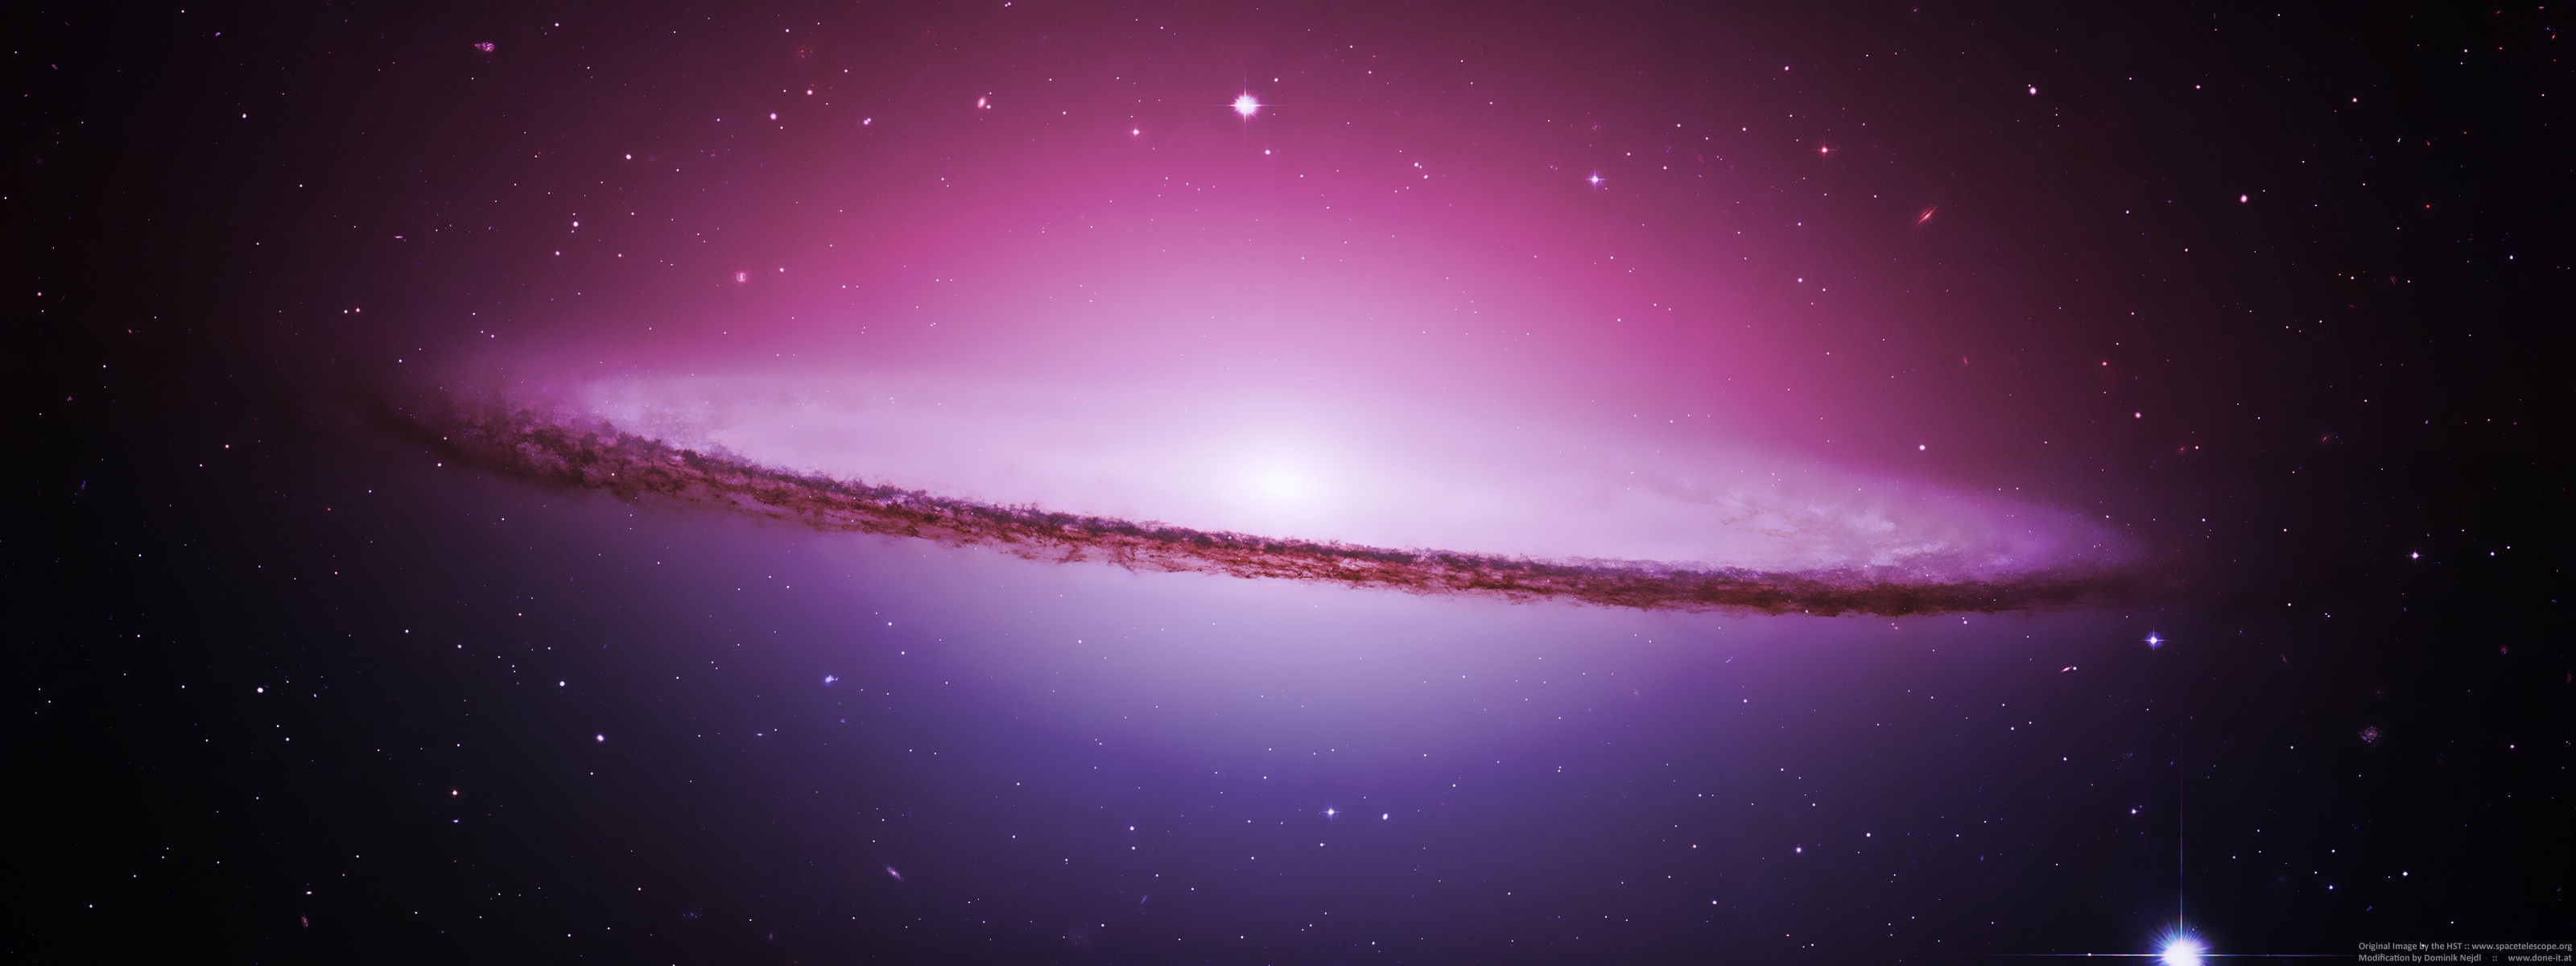 outer space, stars, galaxies, purple, sombrero galaxy - desktop wallpaper